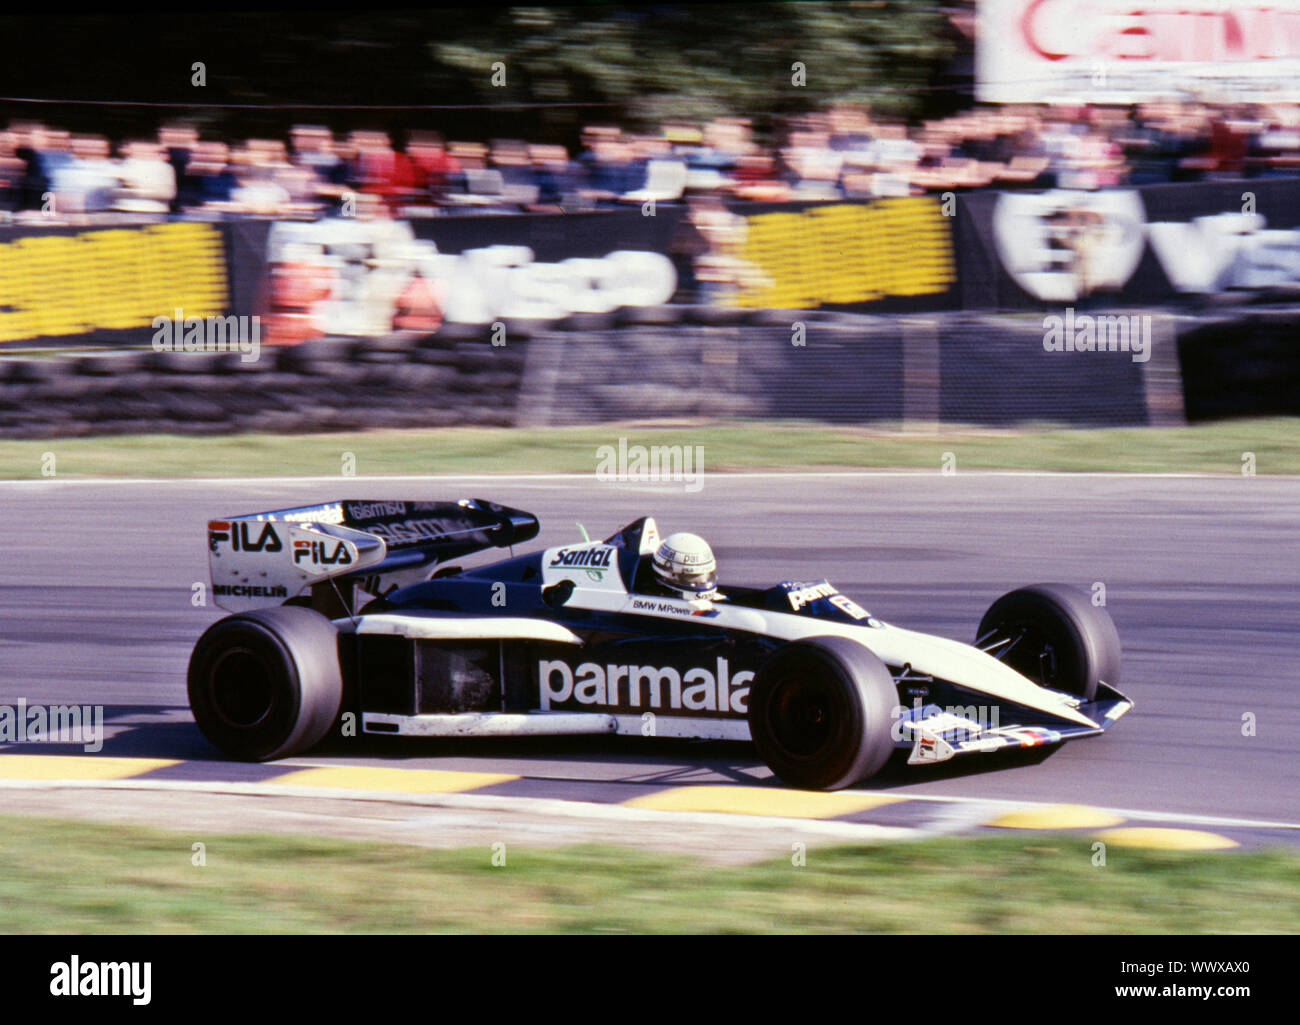 Brabham BT52 GP d'Europe 1983 Brands Hatch, Ricardo Patrese. Banque D'Images